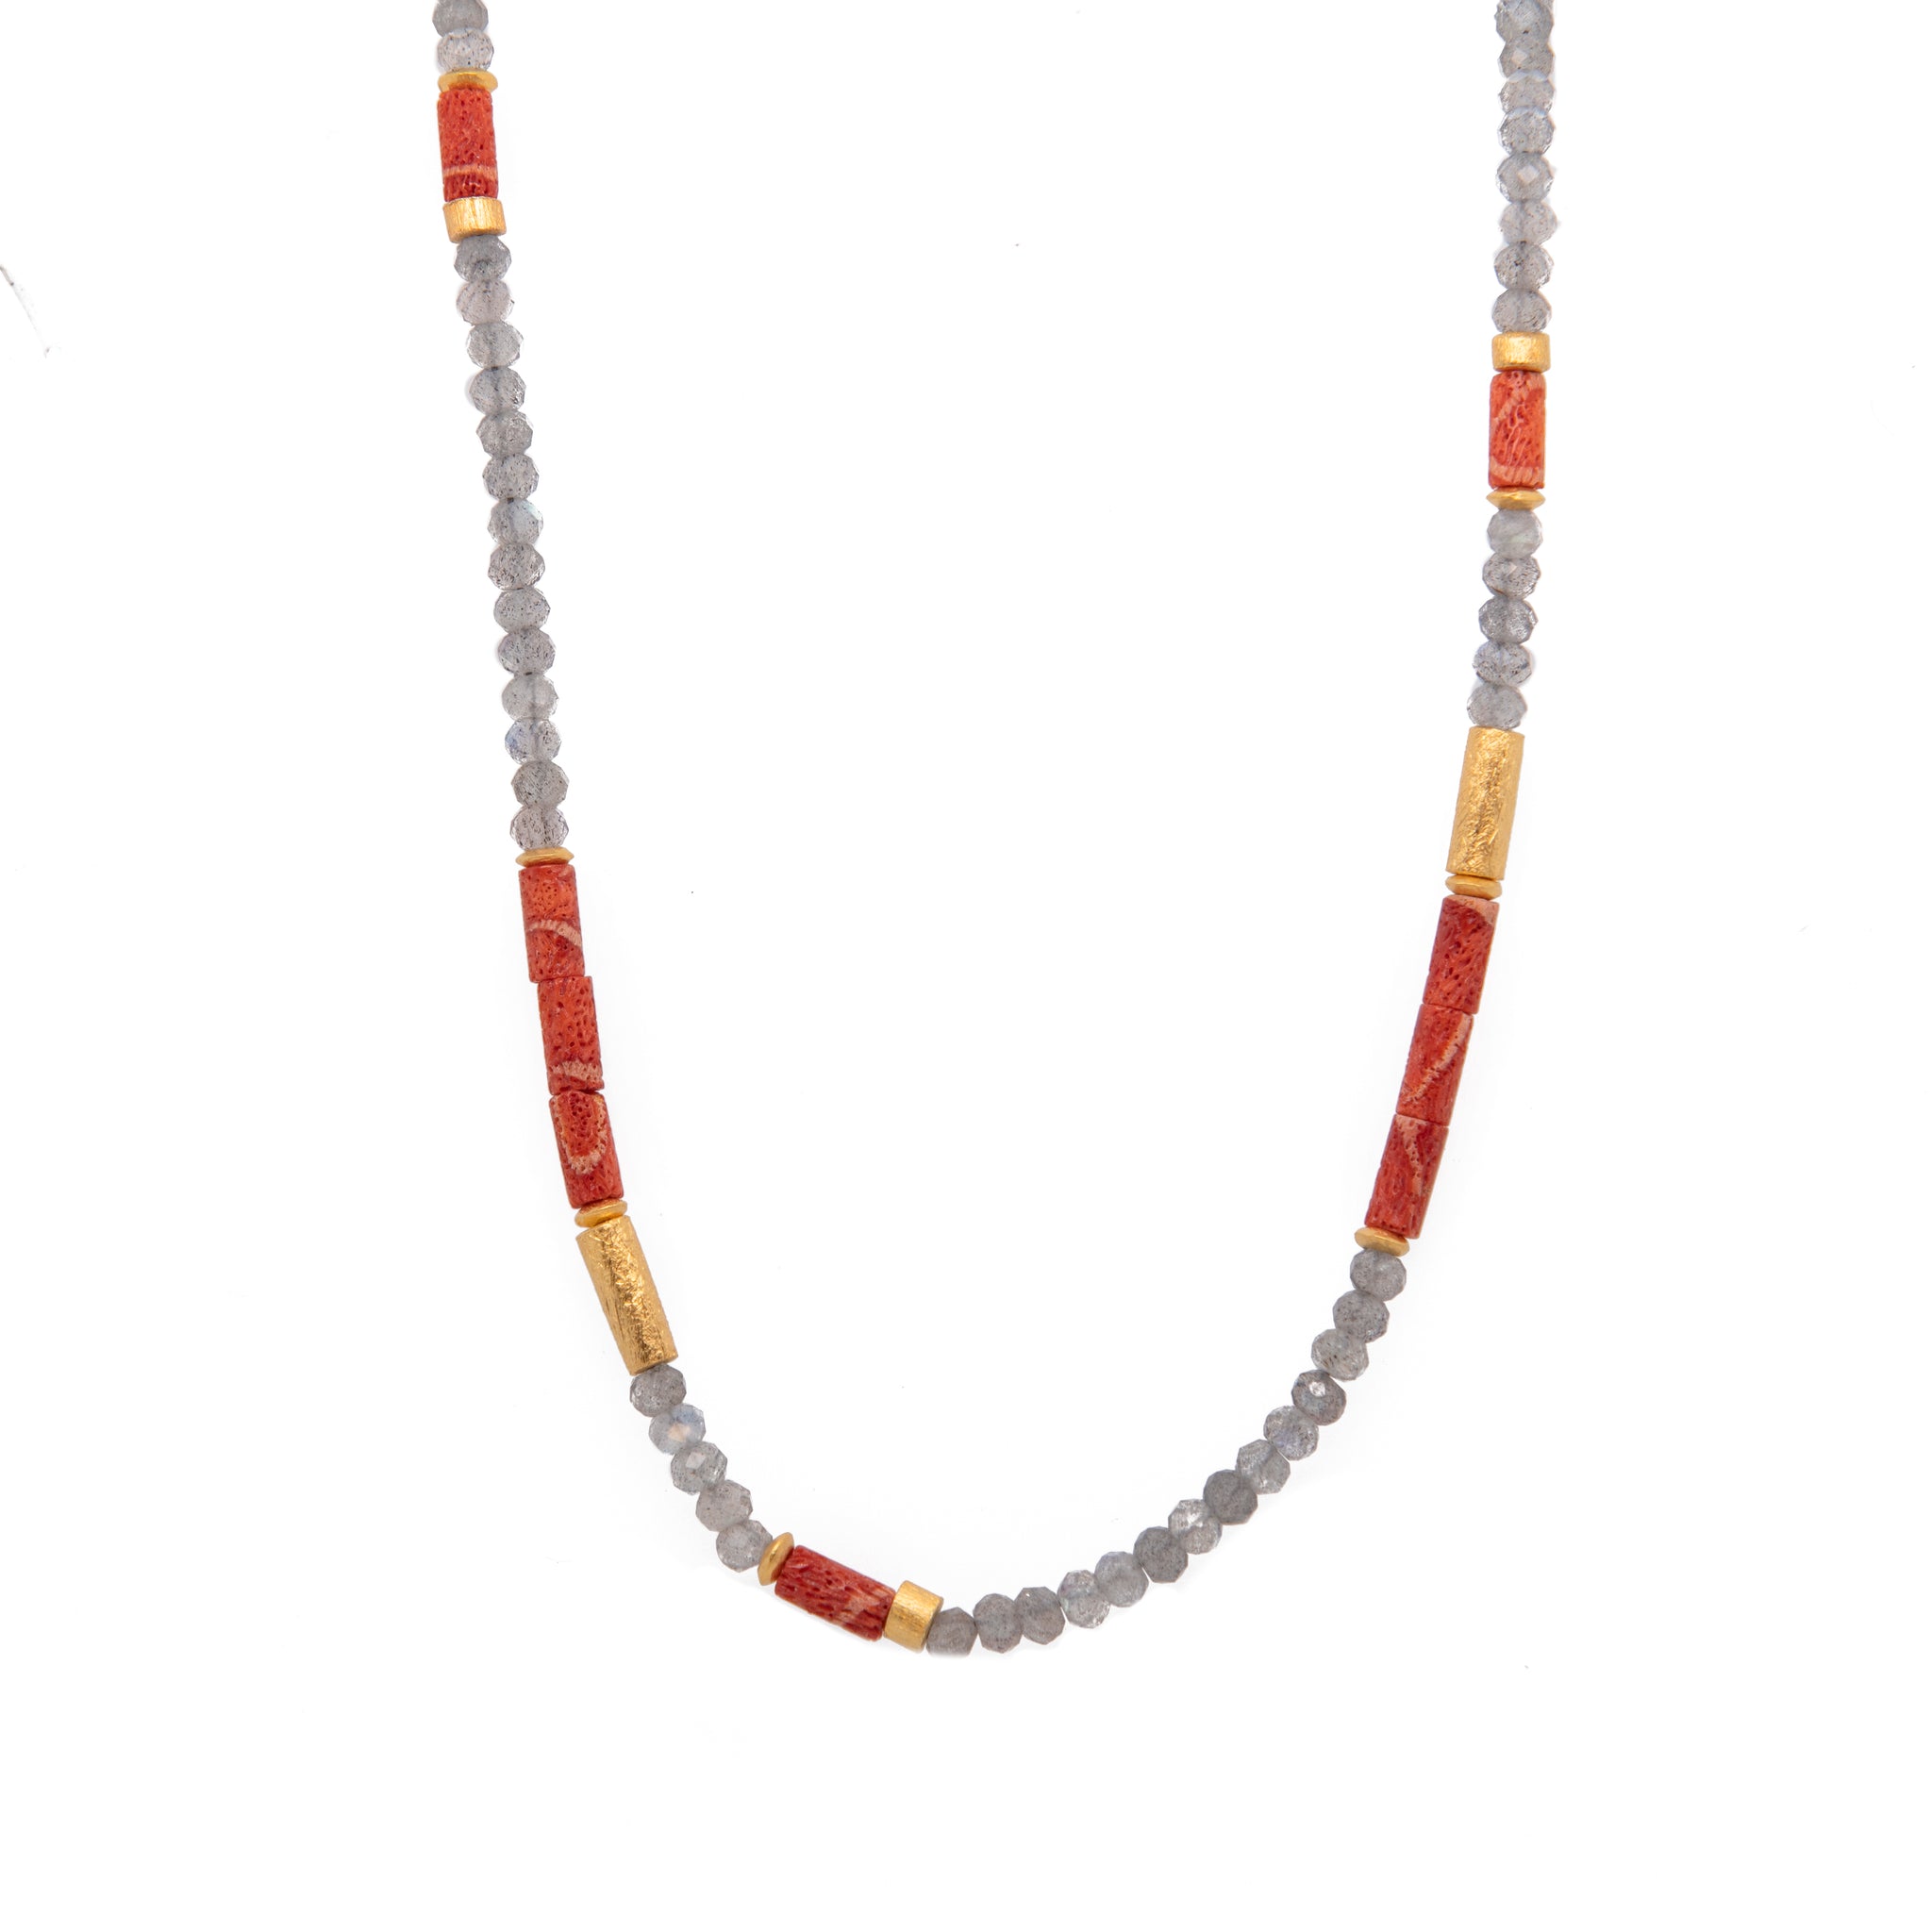 Coral and Labradorite 3mm Necklace 24K Fair Trade Gold Vermeil